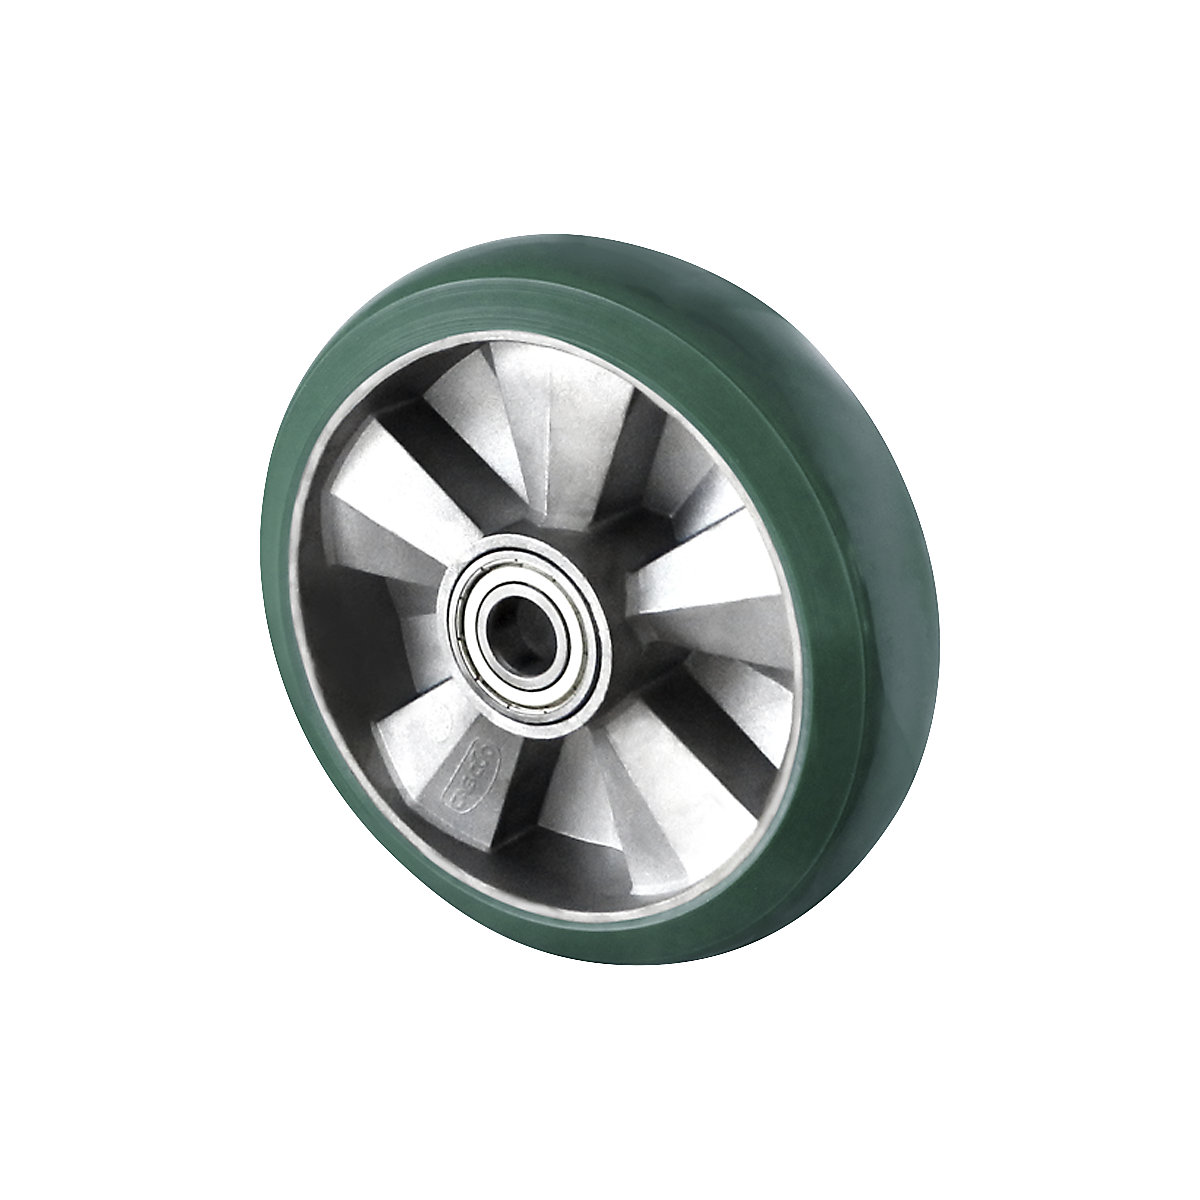 EUROKRAFTbasic – PU elastic wheel, green, double ball bearing, 2+ items, wheel Ø x width 160 x 50 mm